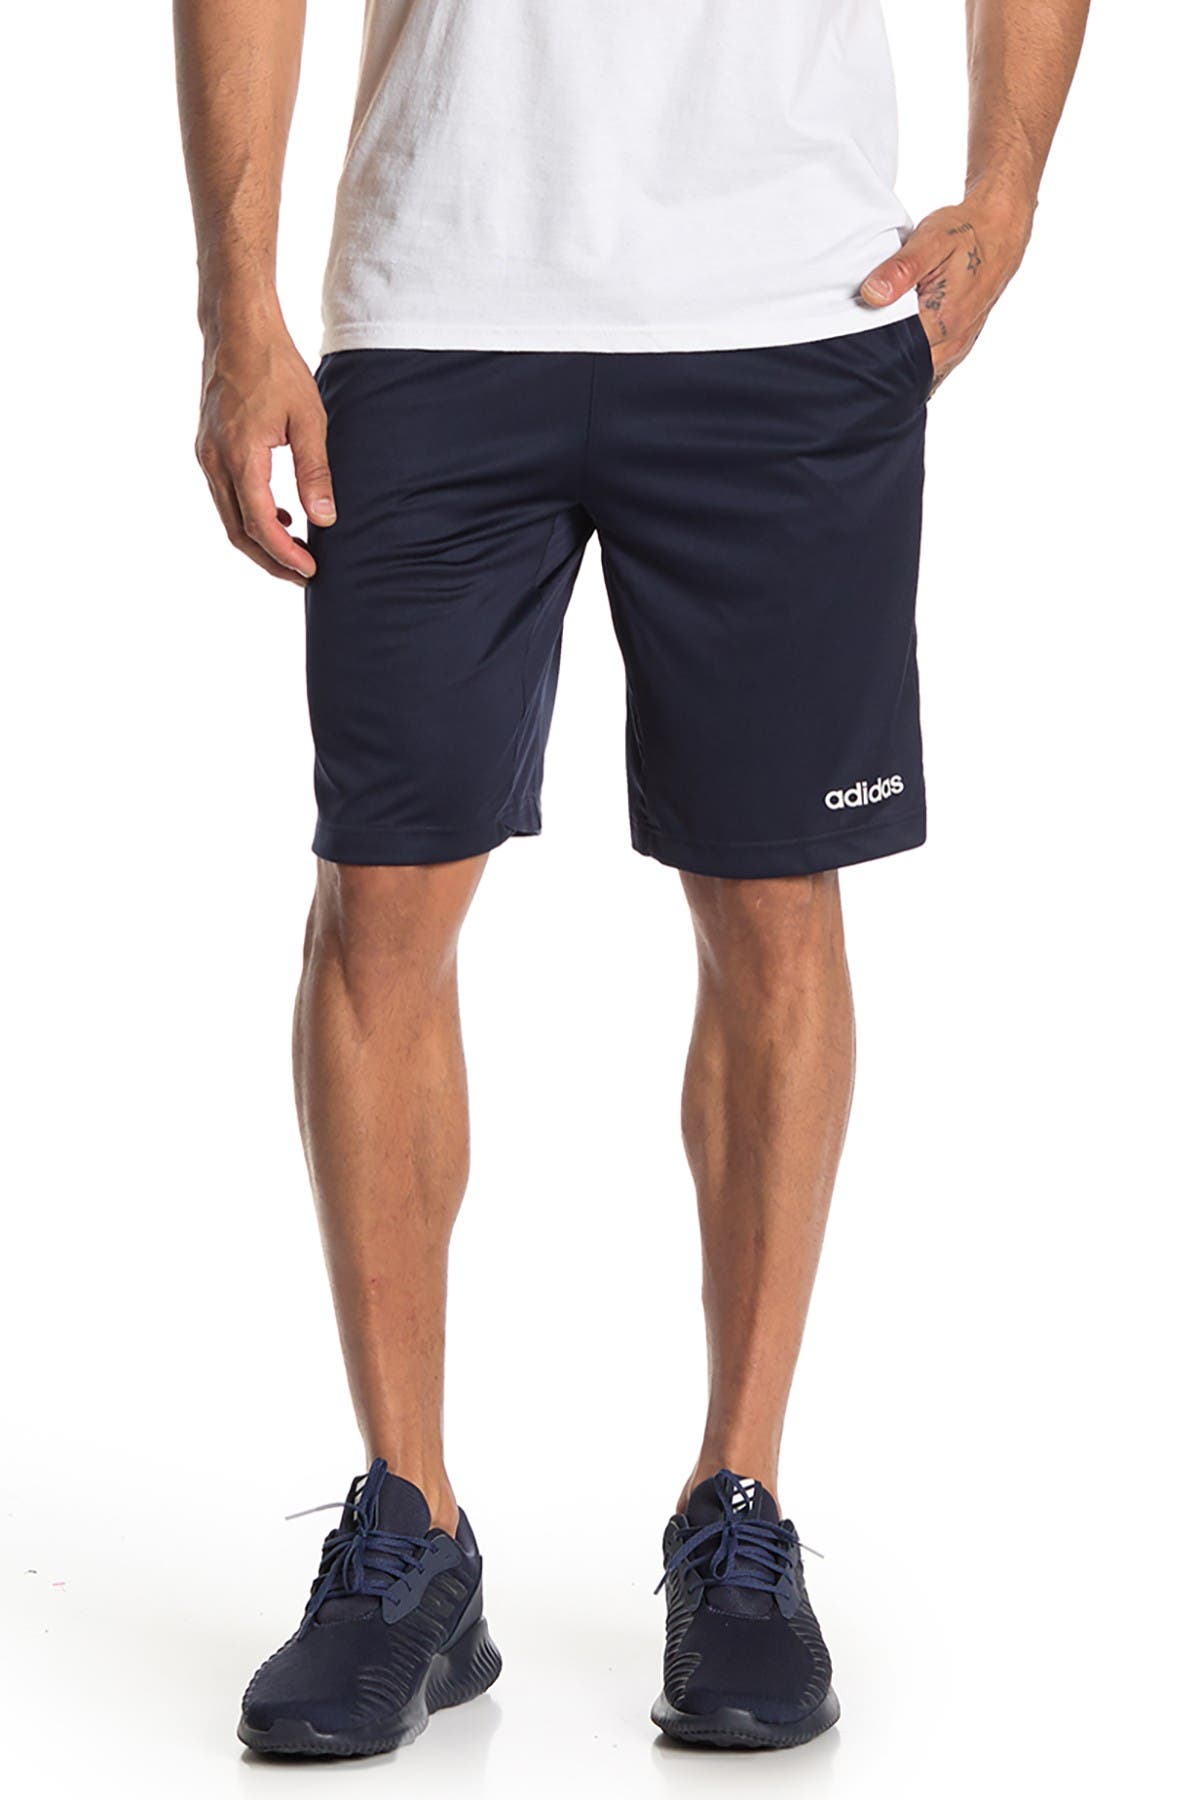 design 2 move shorts